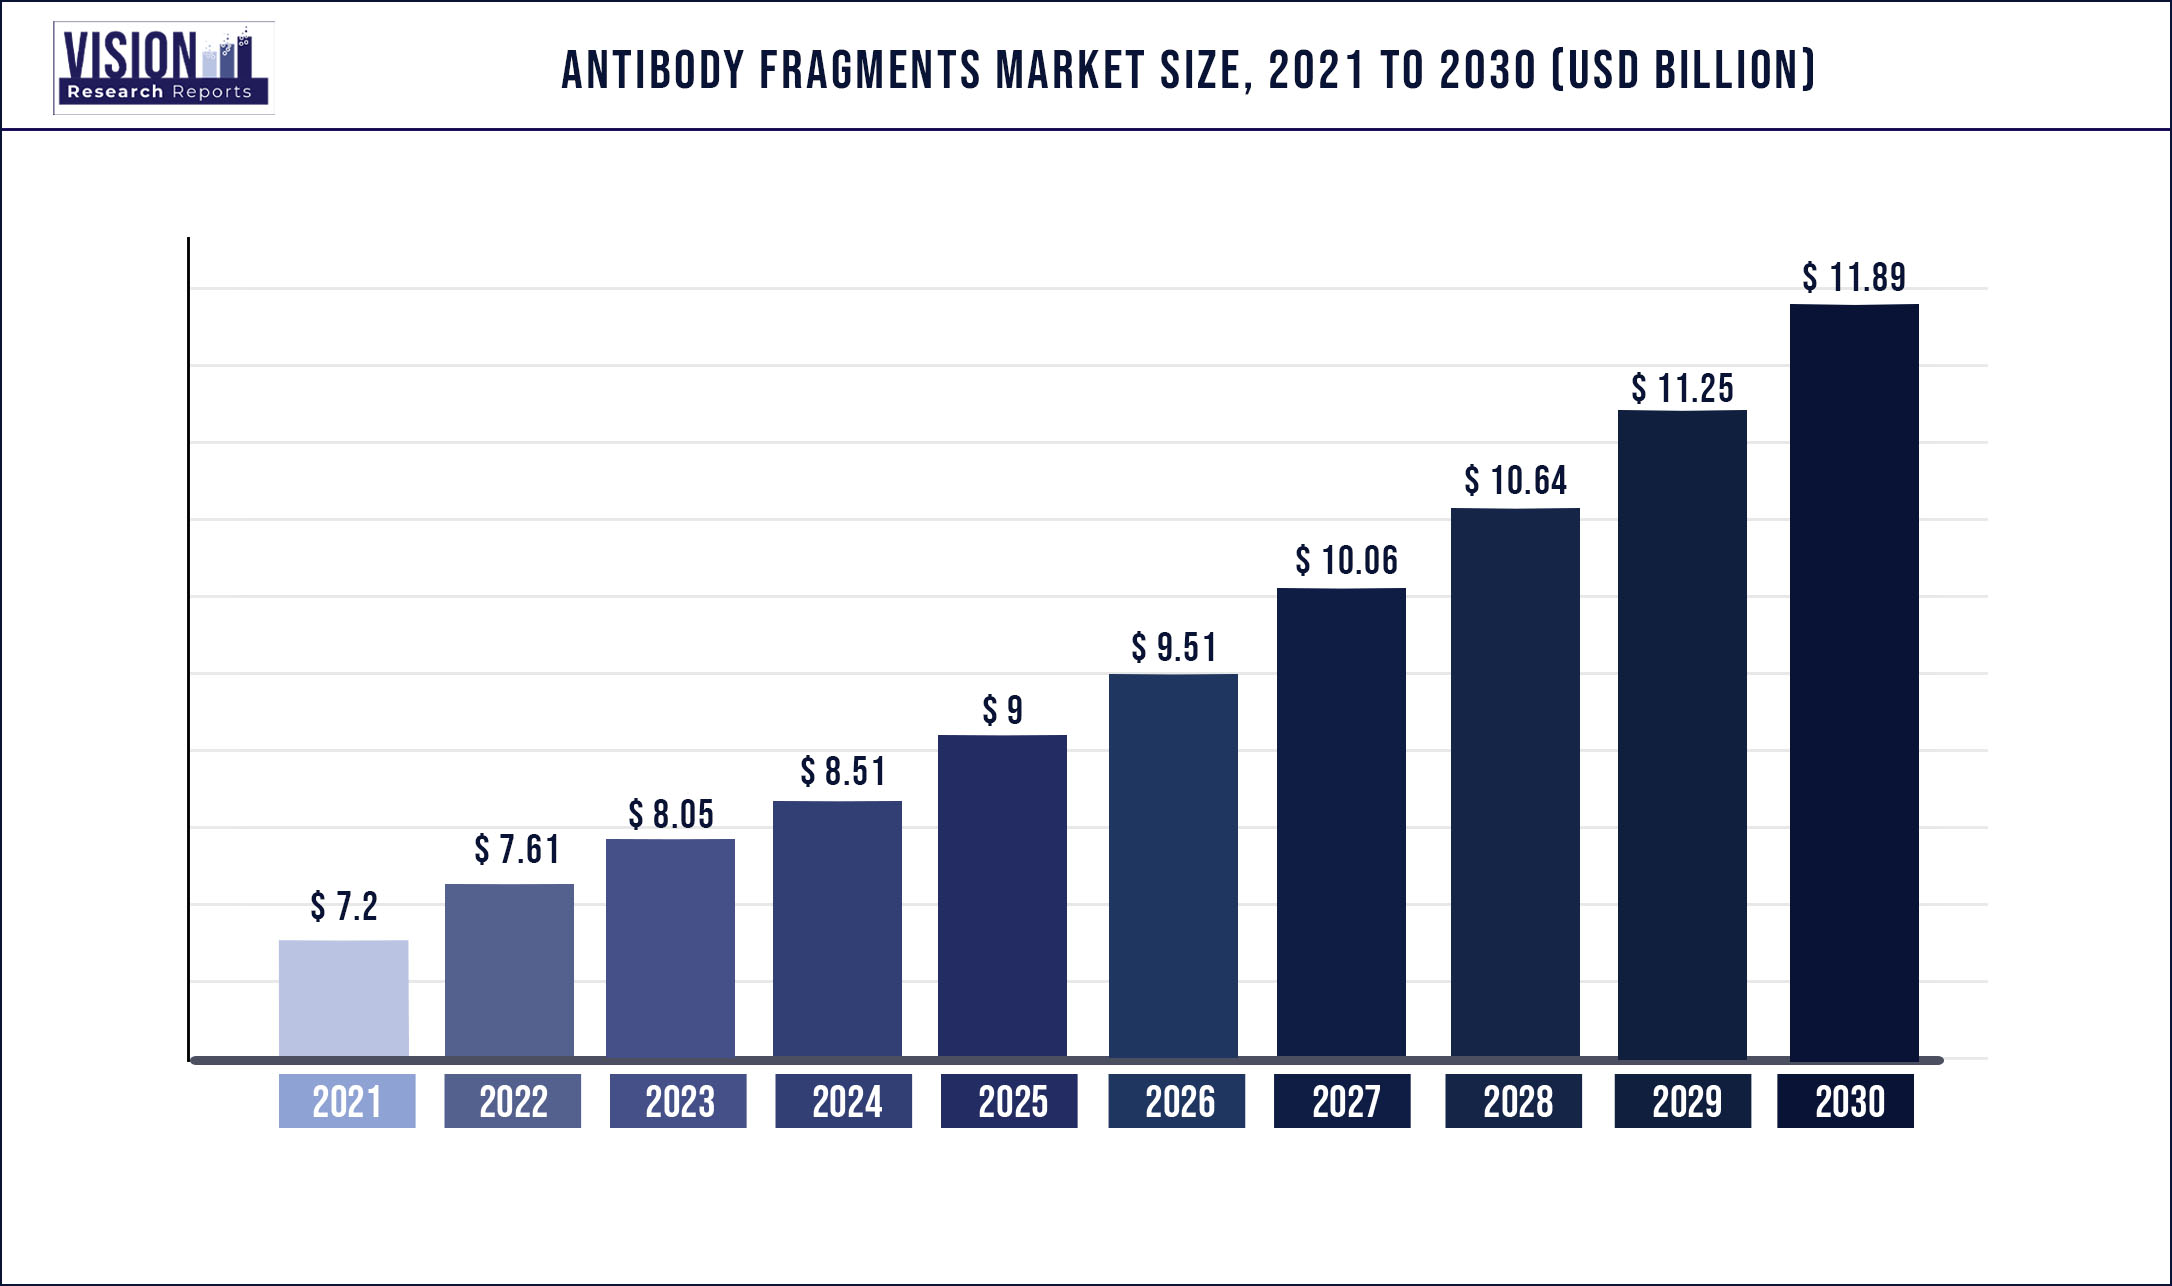 Antibody Fragments Market Size 2021 to 2030